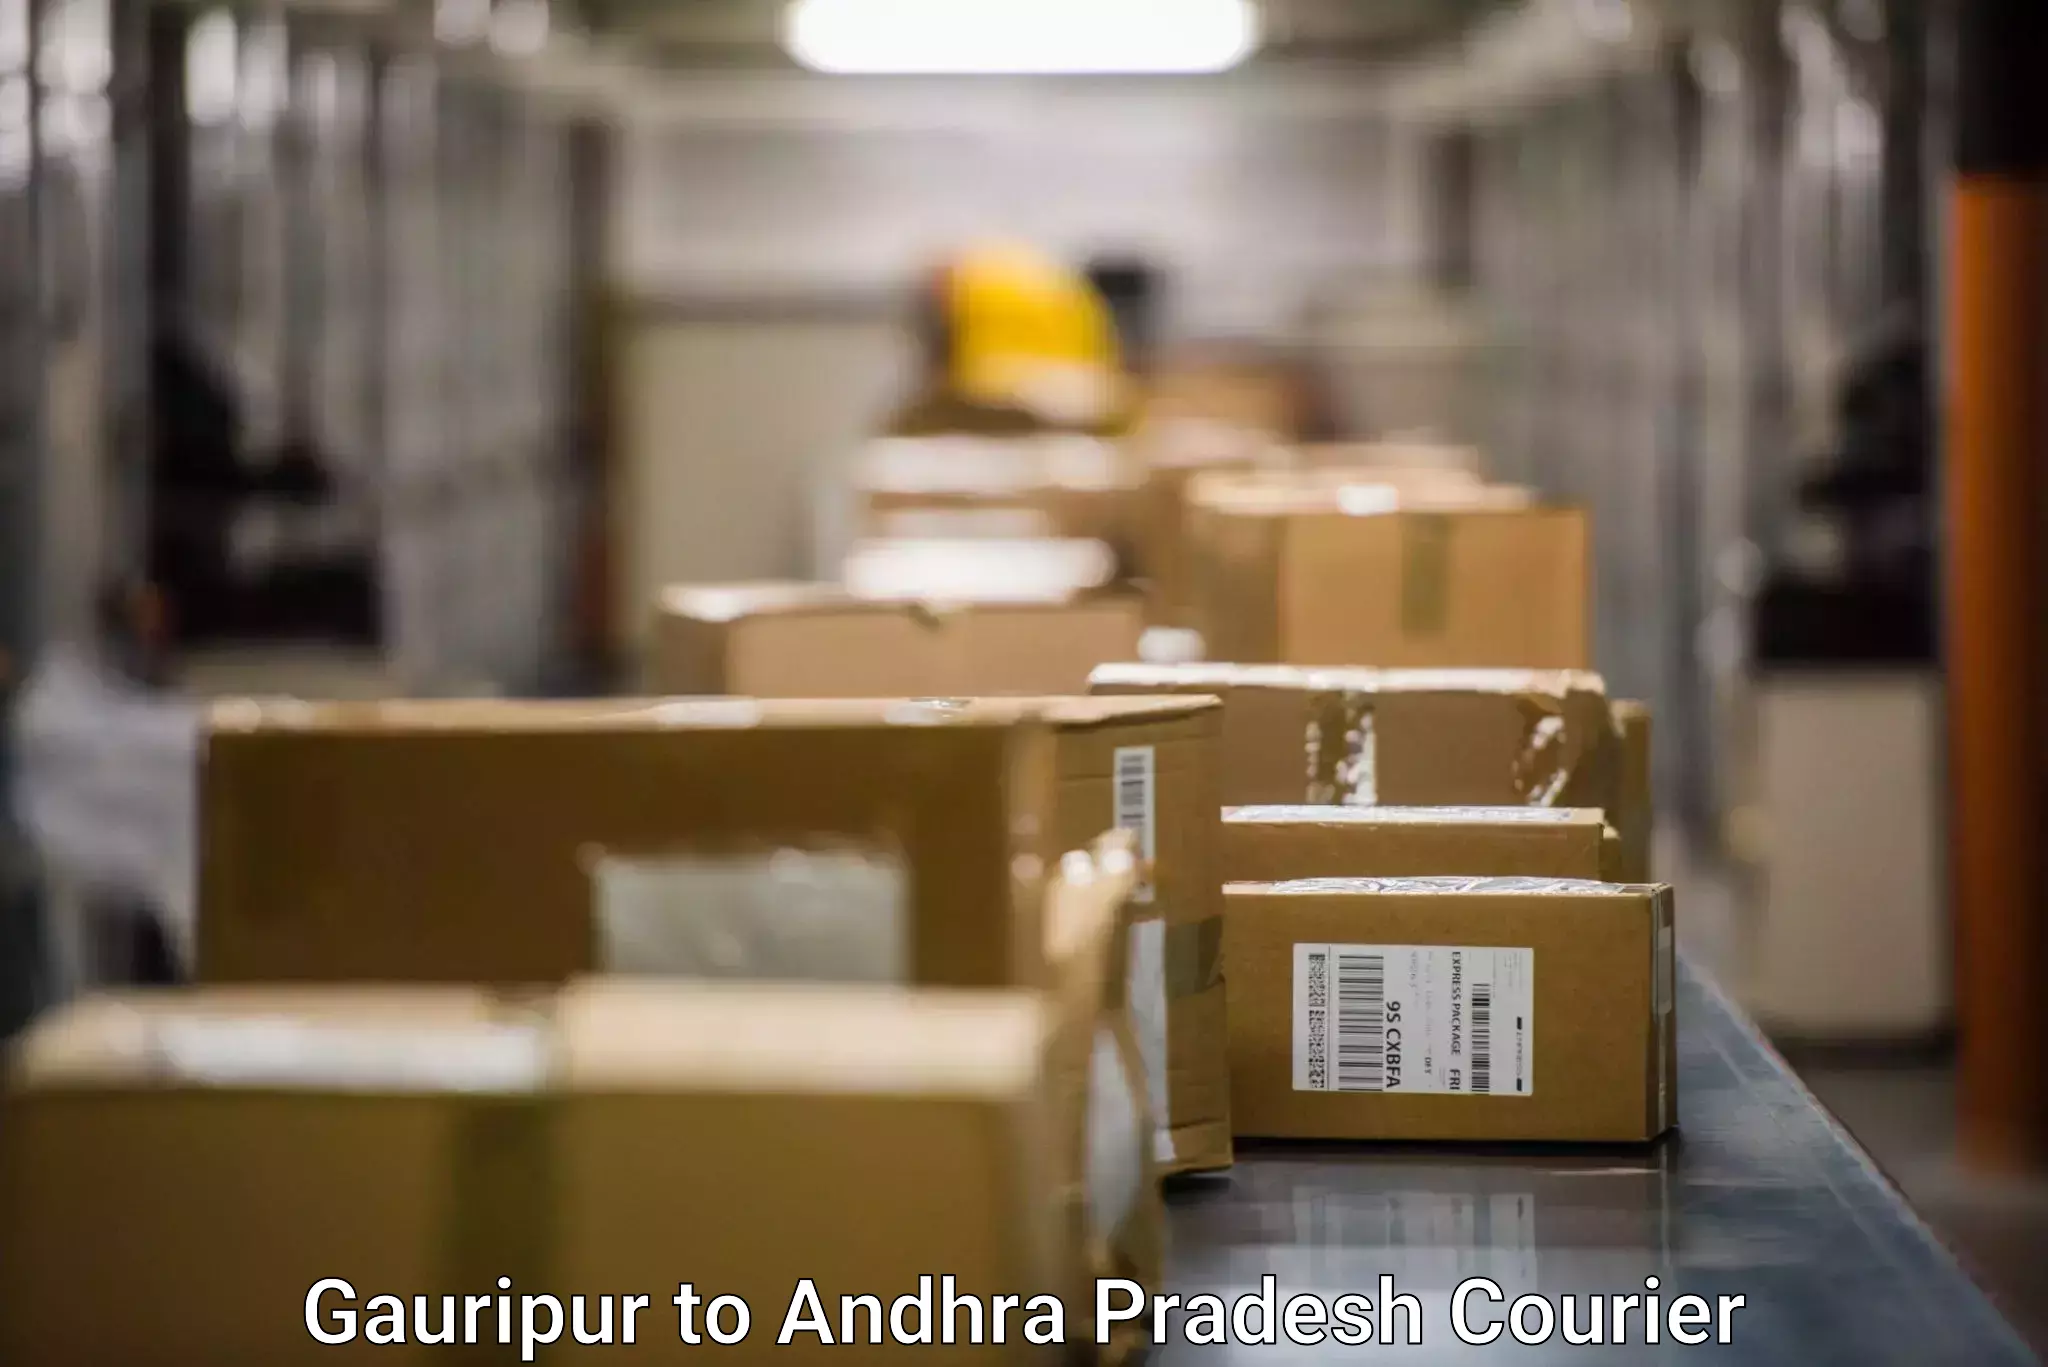 Cargo delivery service Gauripur to Andhra Pradesh